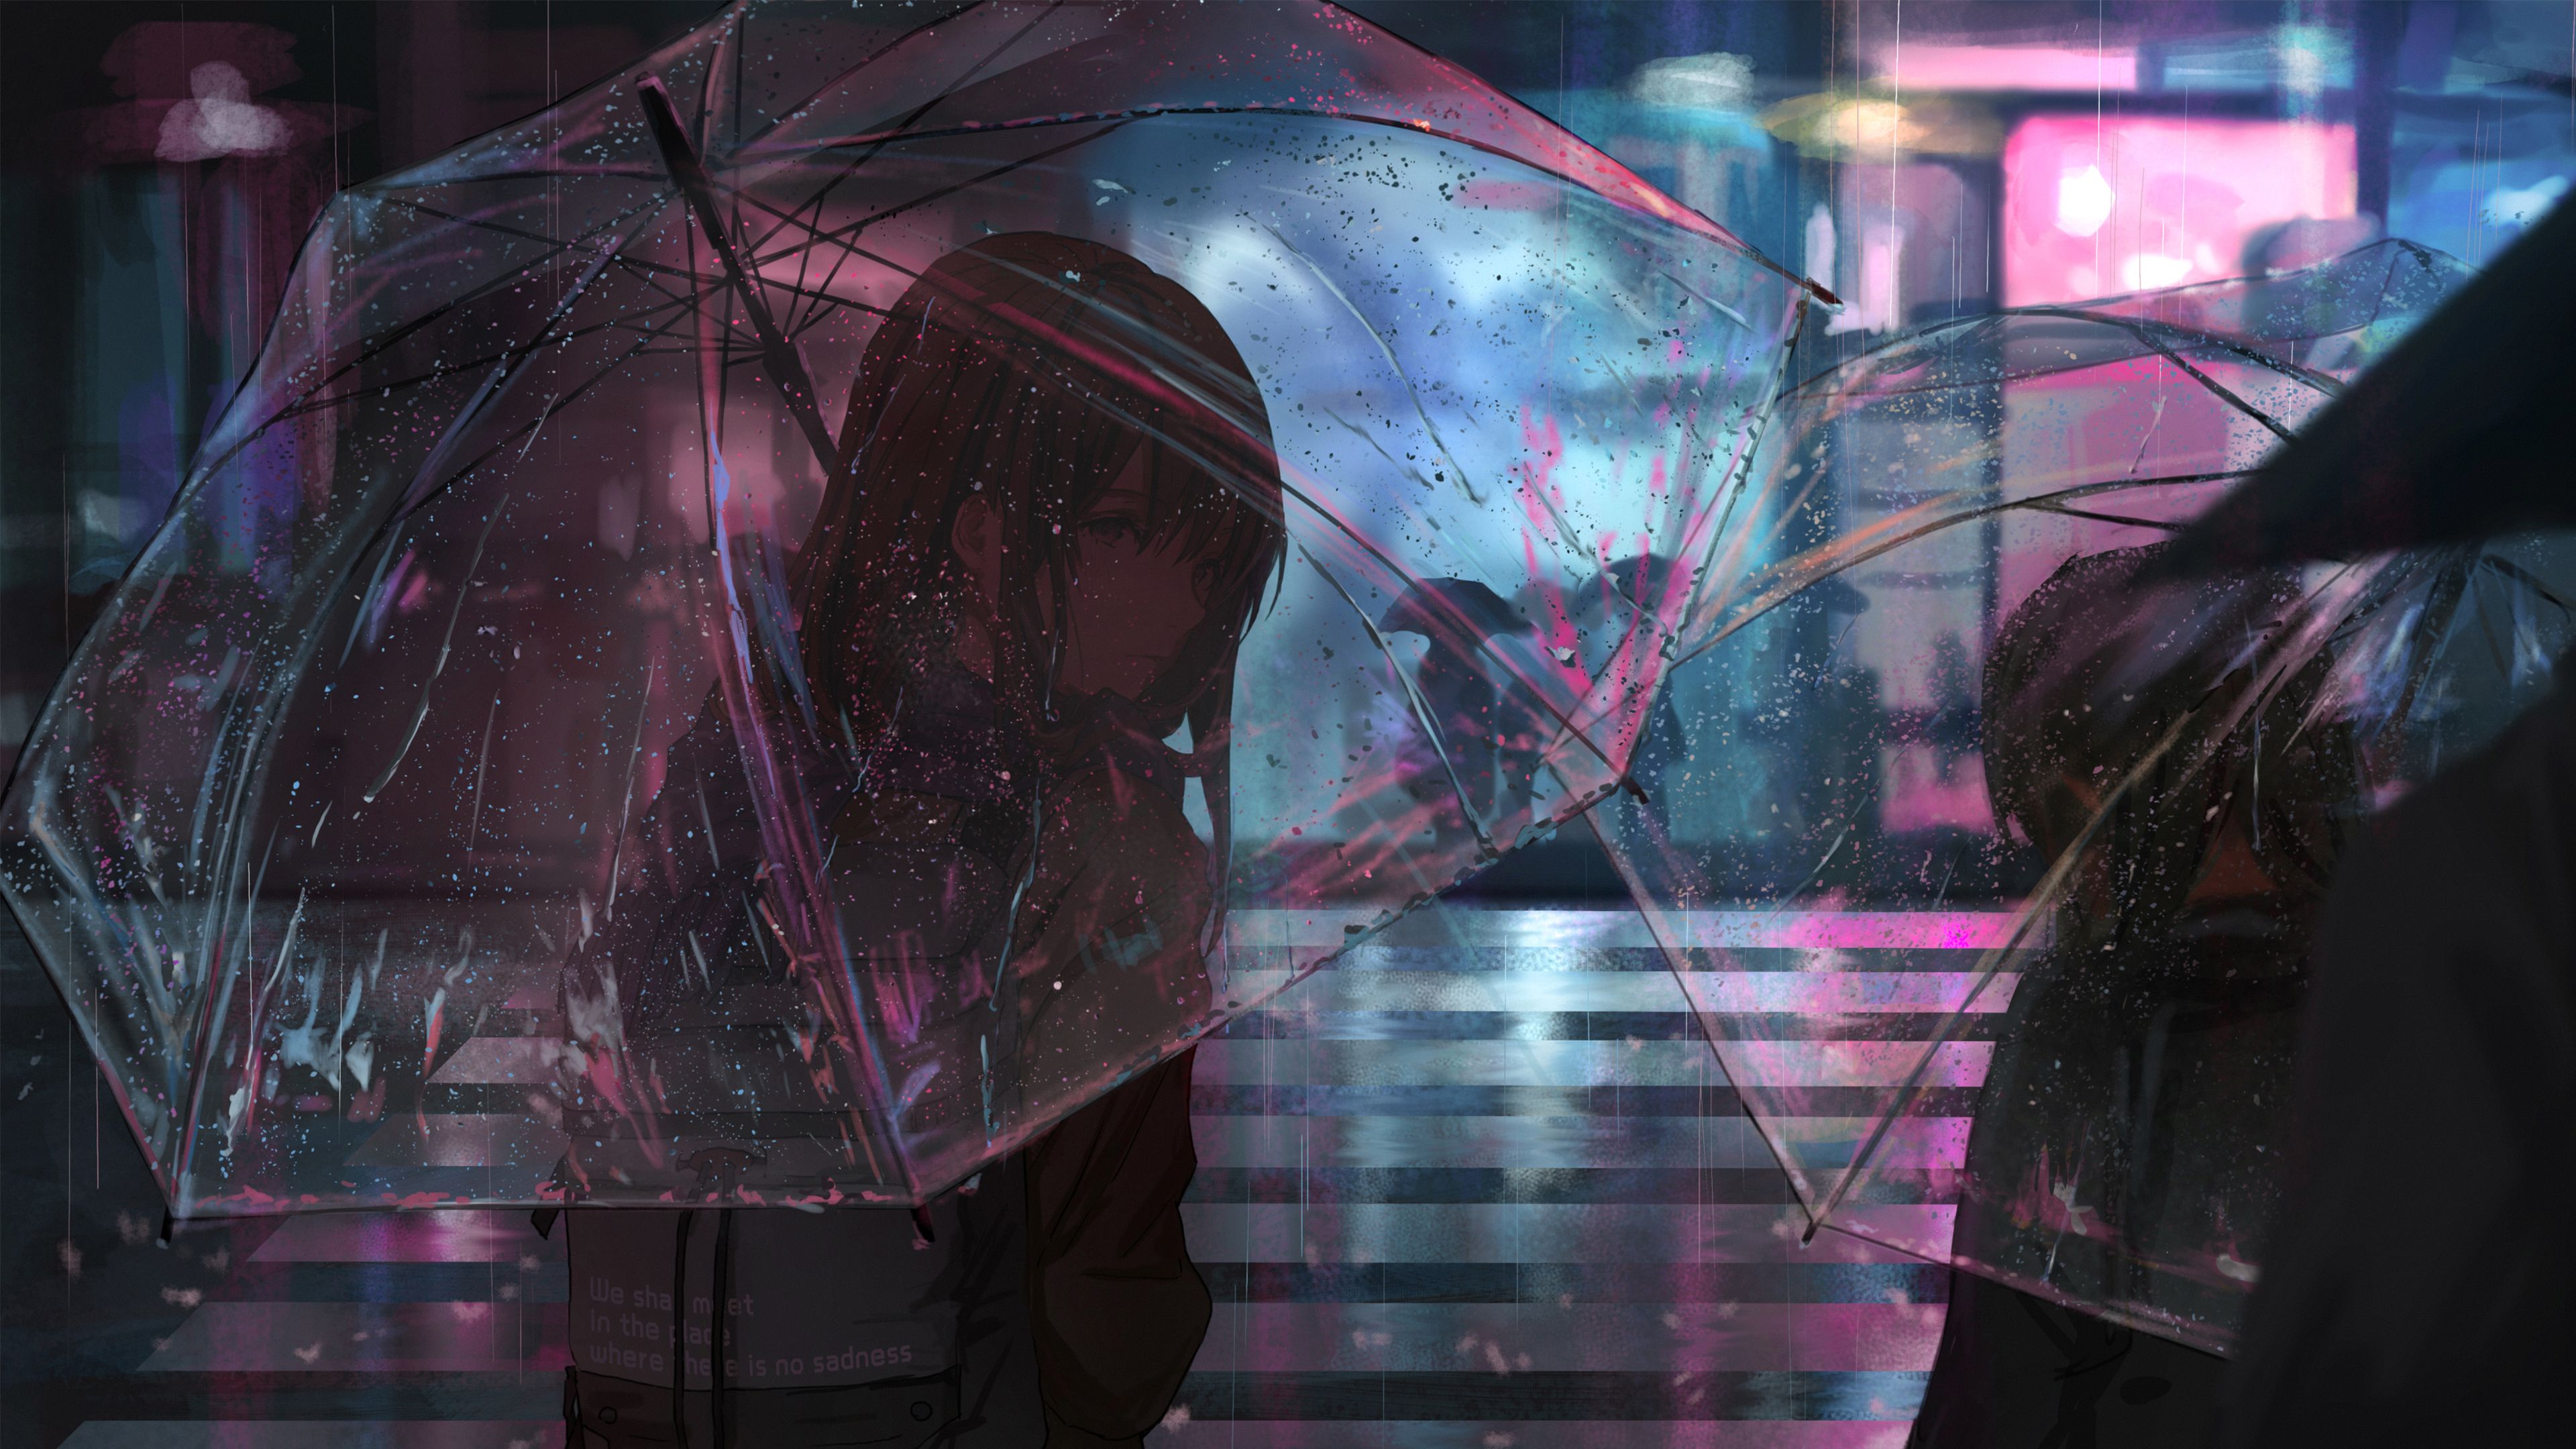 Wallpaper 4k Anime Girl In Rain With Umbrella 4k 4k Wallpaper